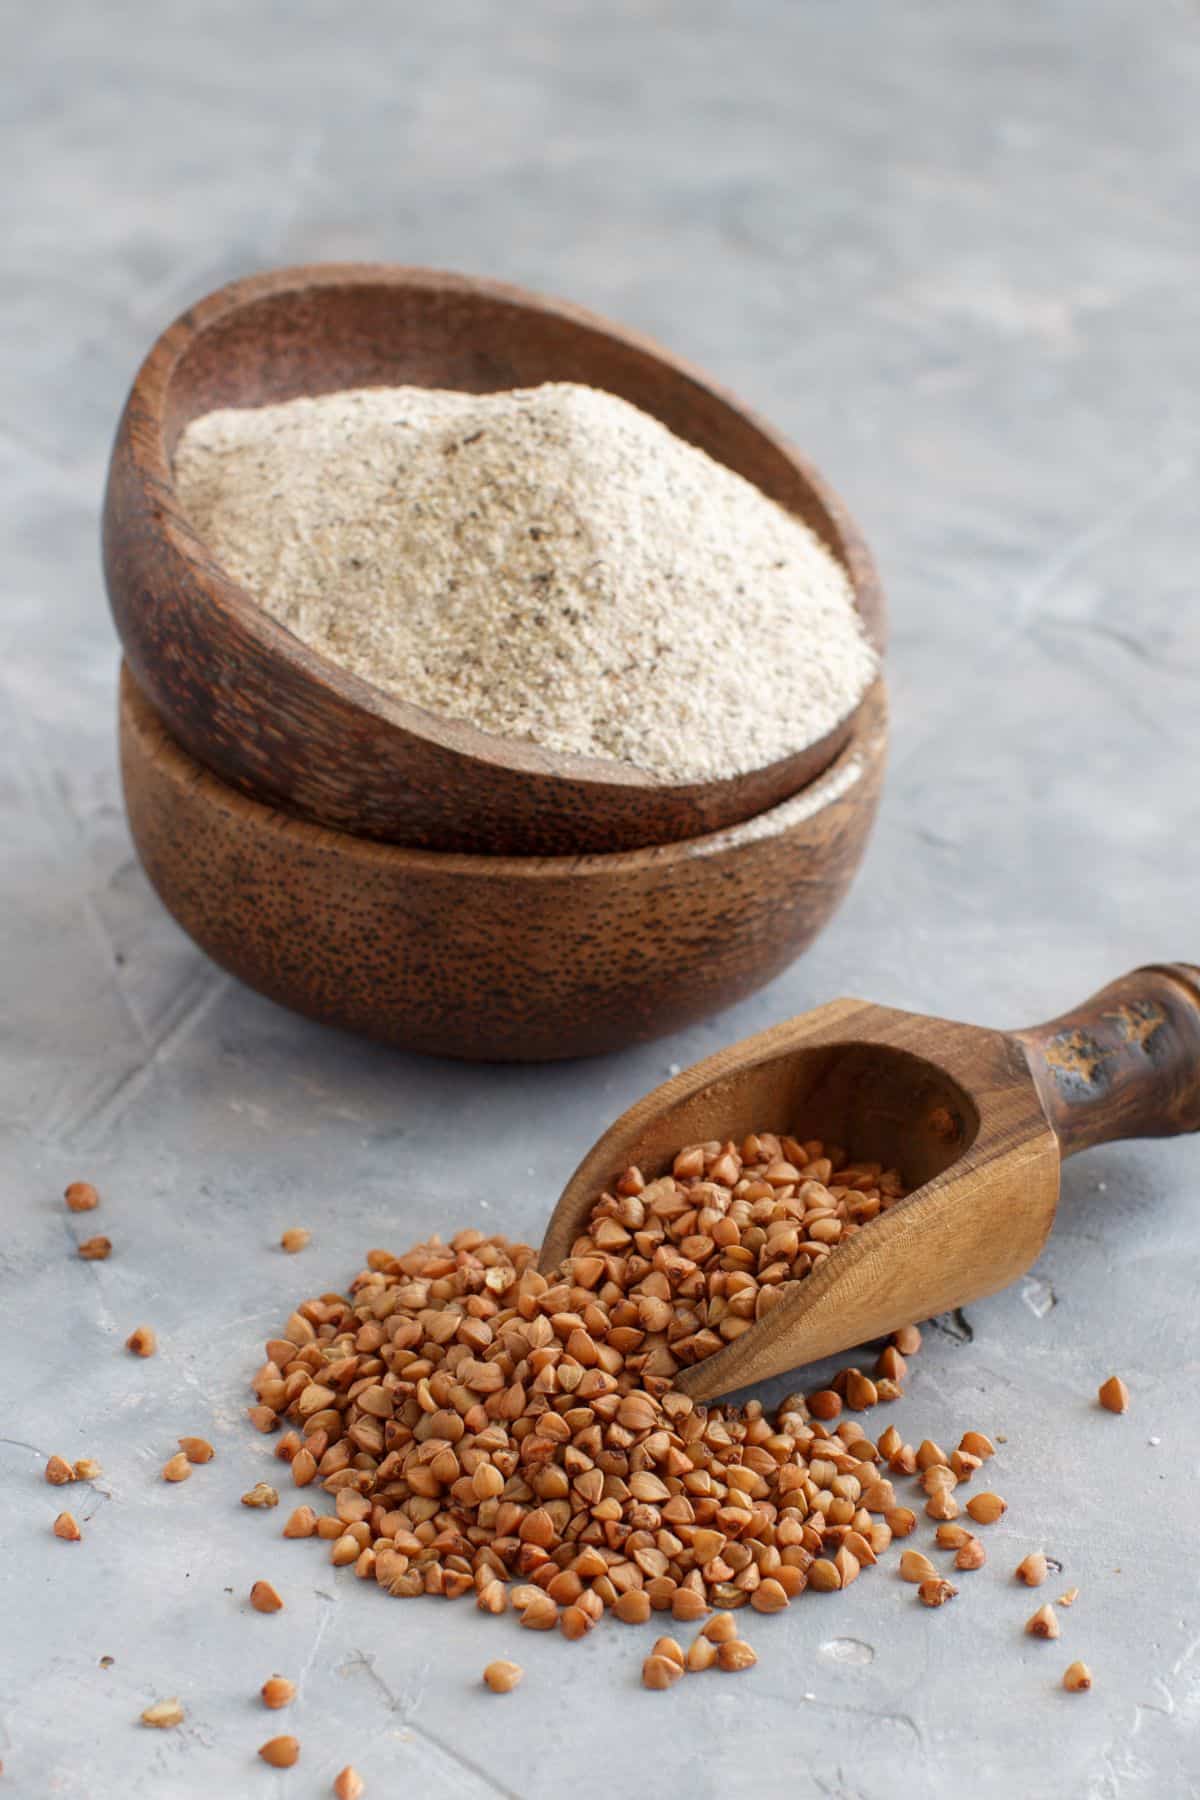 Bowls of buckwheat flour and scoop of buckwheat kernels.